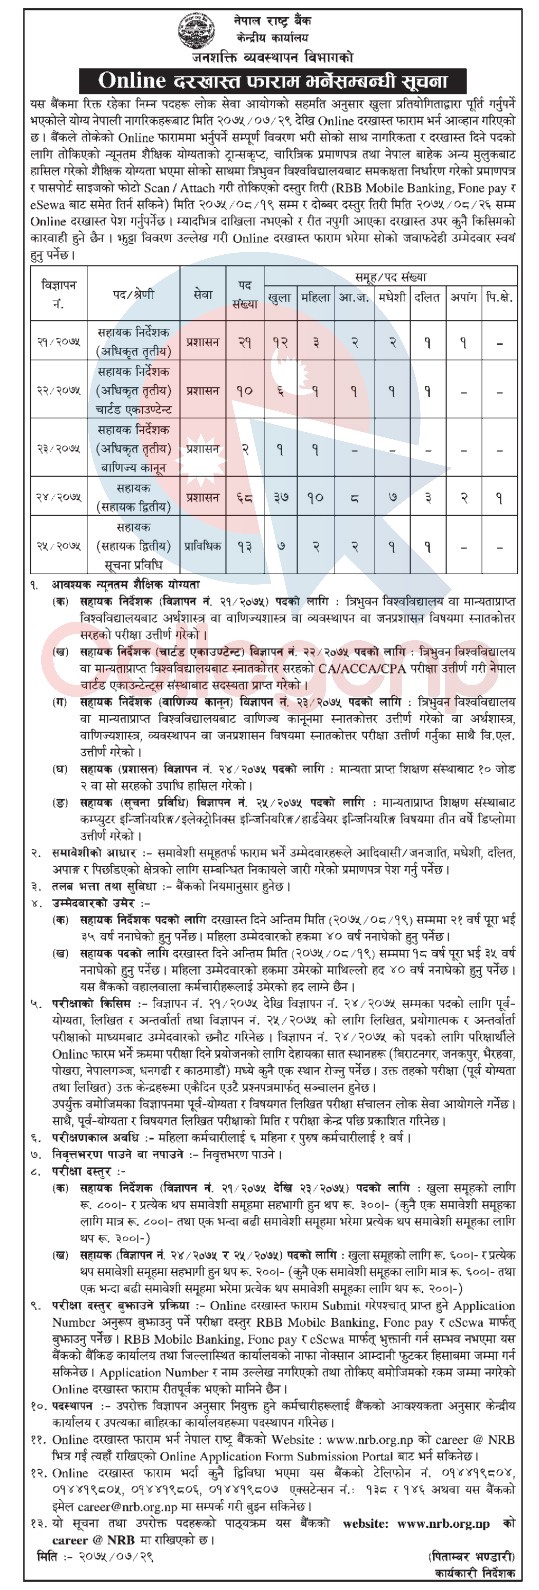 nepal rastra bank vacancy